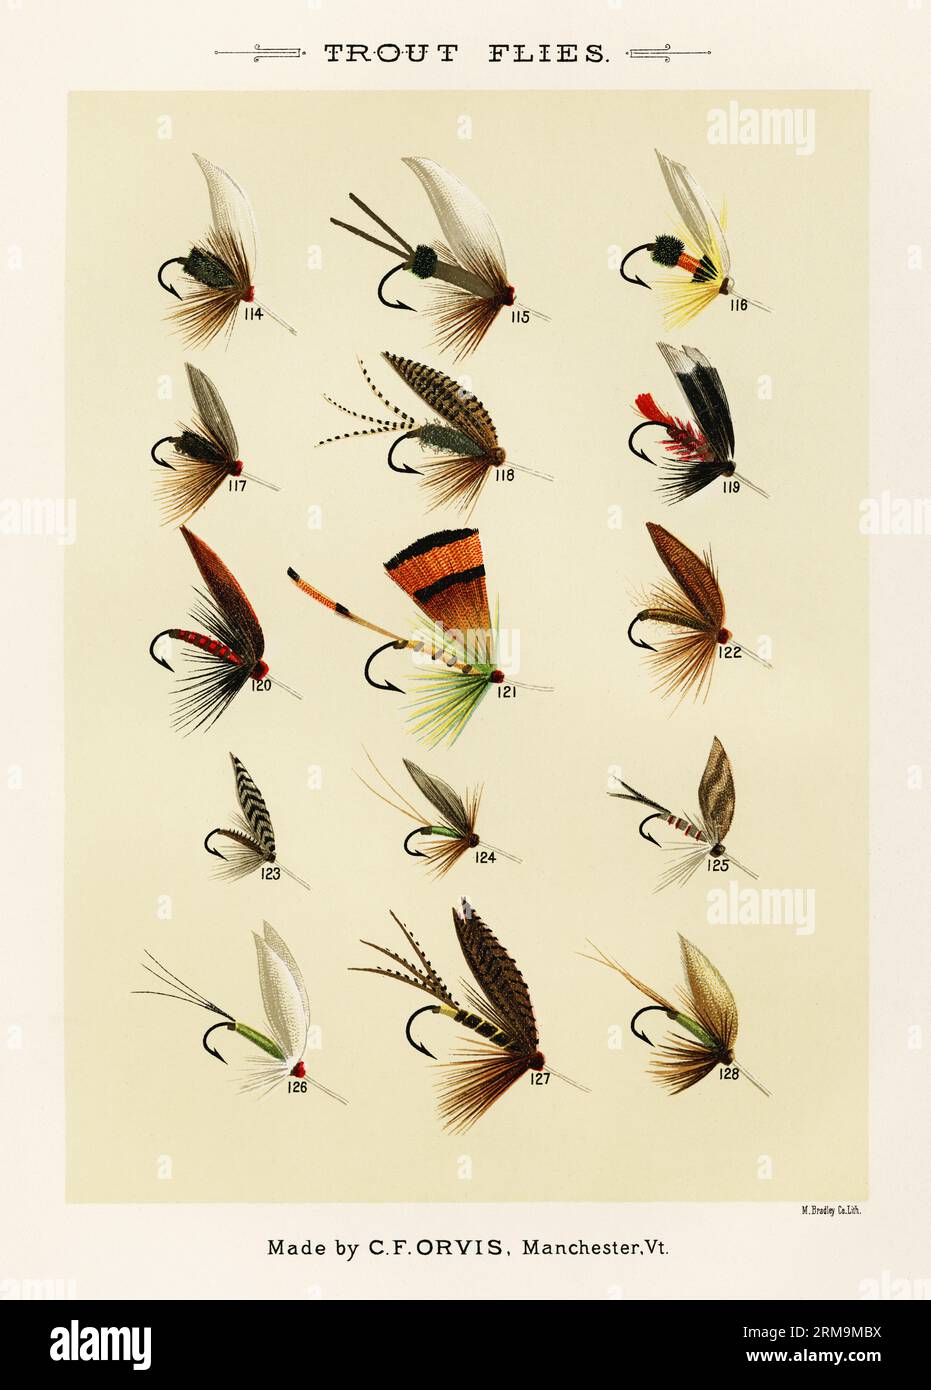 Vintage Illustration of fly fishing hooks: Assorted barbed fly